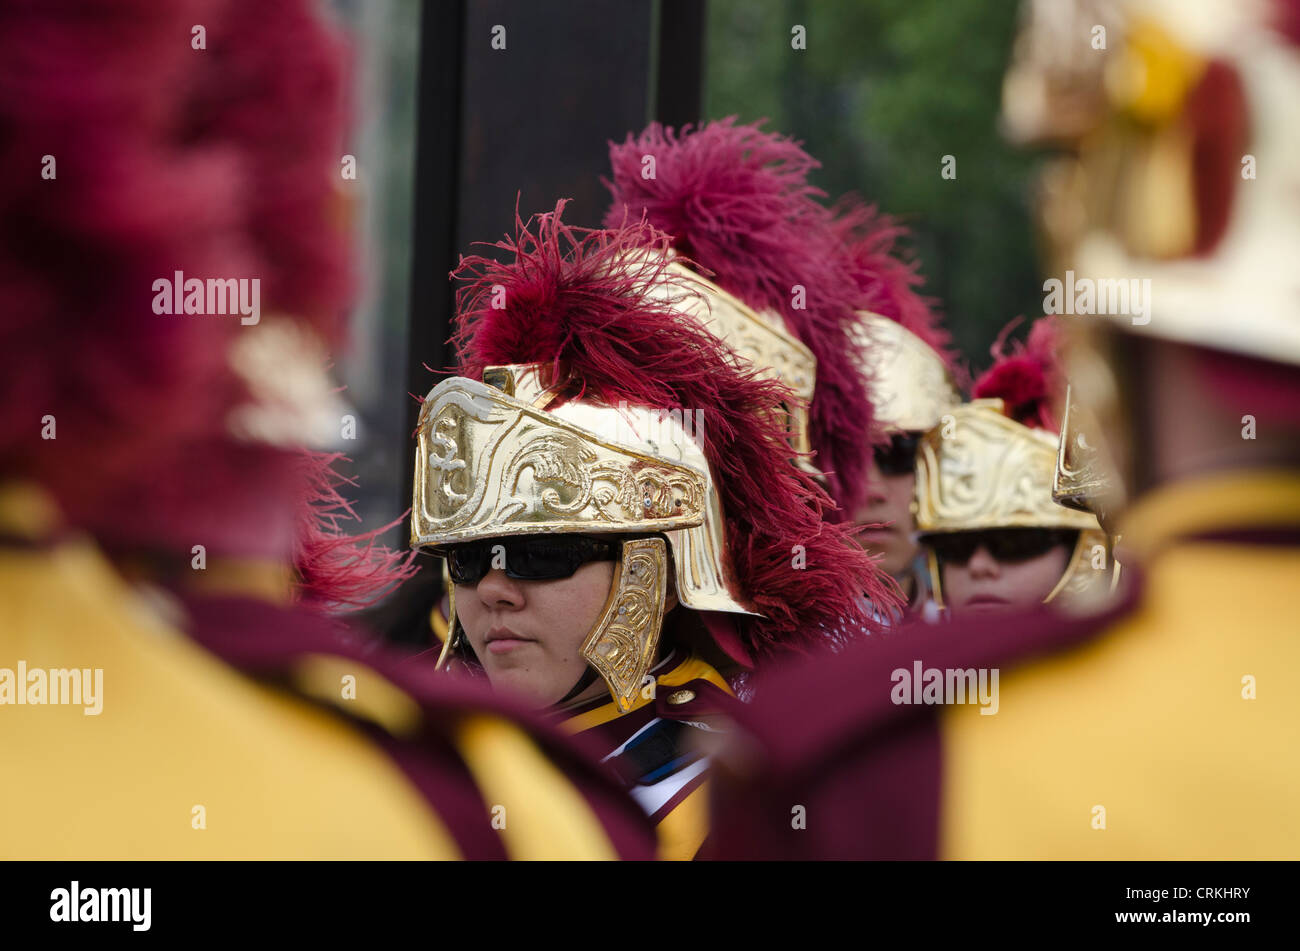 University of Southern California (USC), Trojans Football Team Marching Band Trafalgar square London uk May 2012 Stock Photo